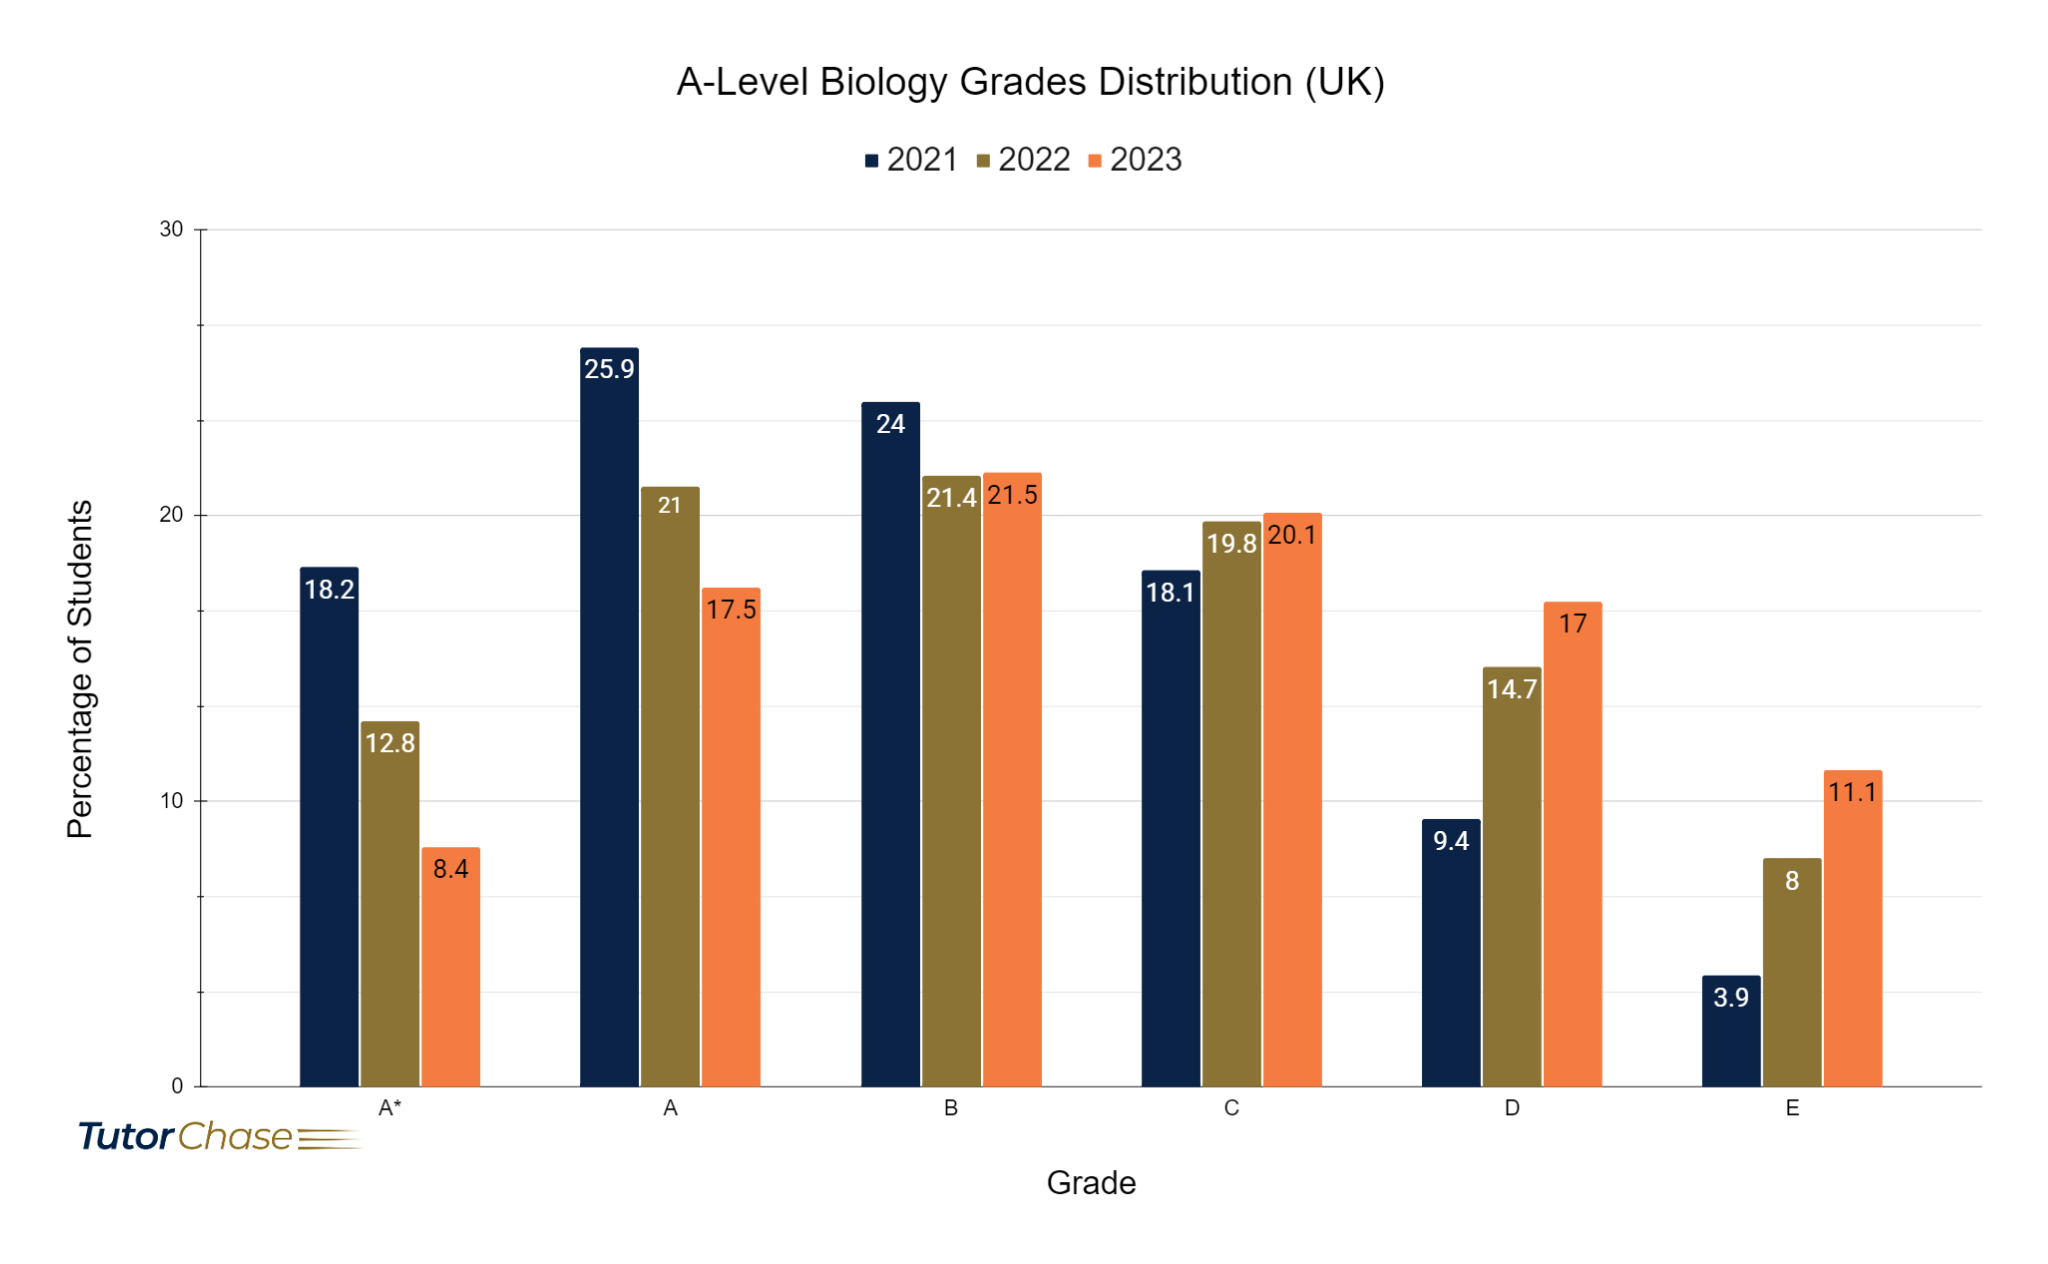 Grades distribution of A-Level Biology in UK 2021-2023